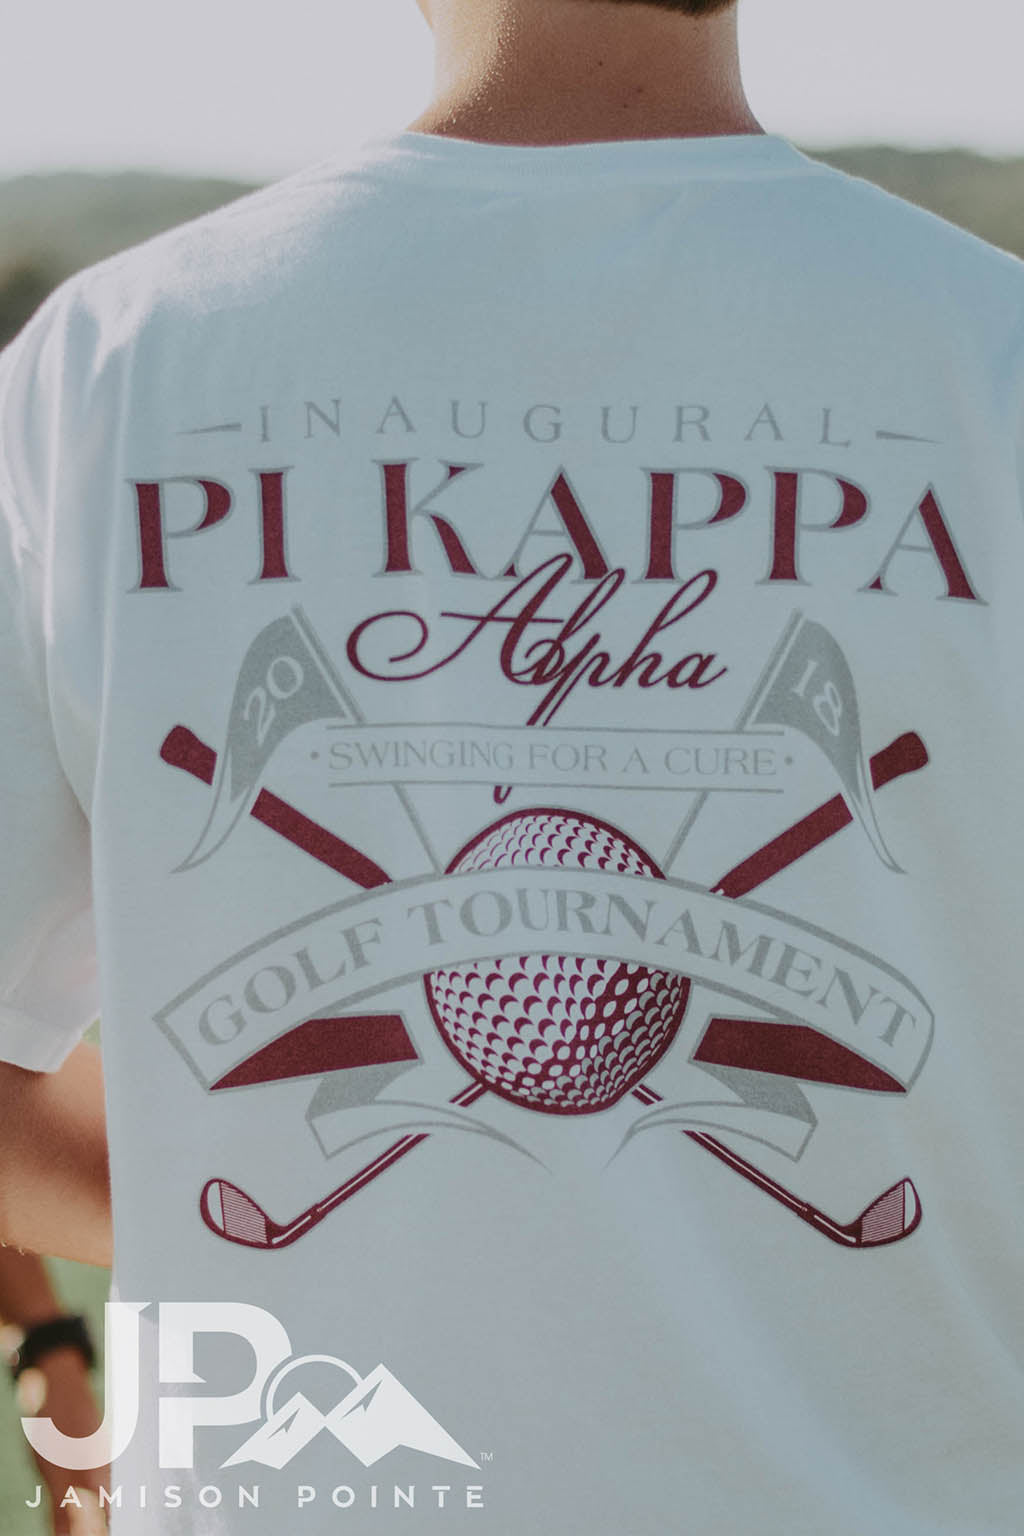 Pi Kappa Alpha Philanthropy Golf Tournament Tee